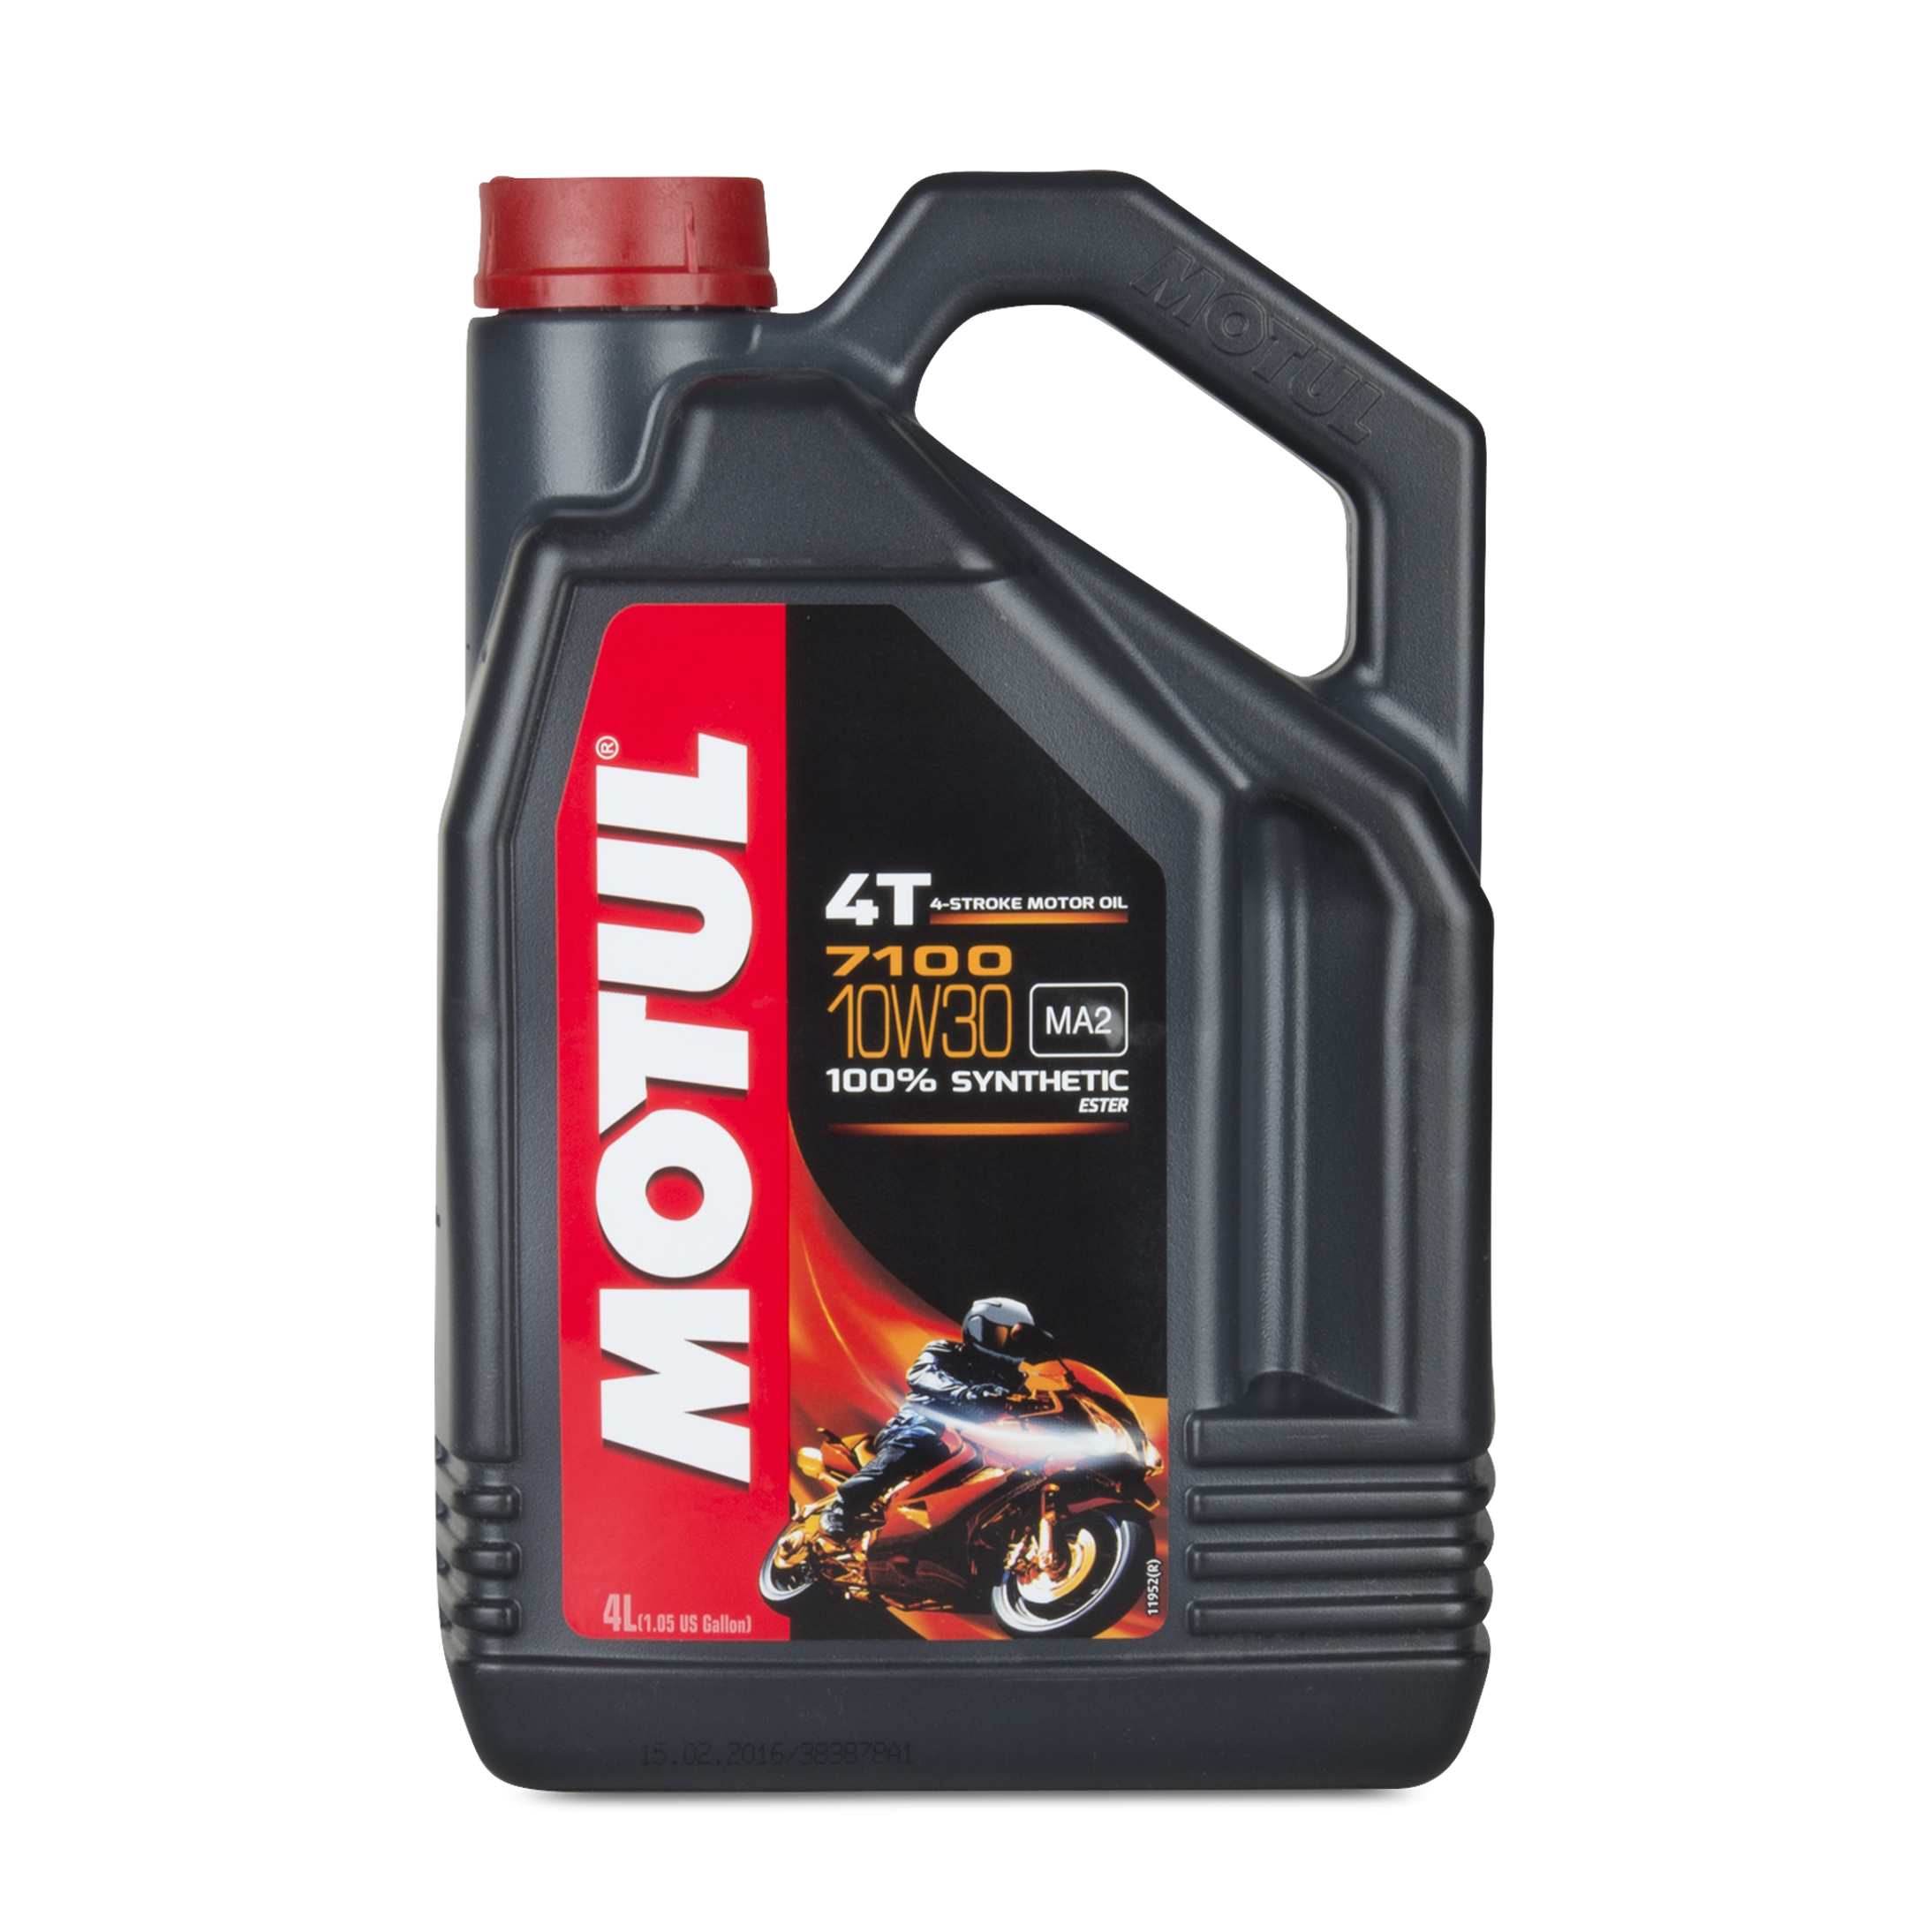 motul-7100-4t-4l-oil-fully-synthetic-now-20-savings-24mx-eu